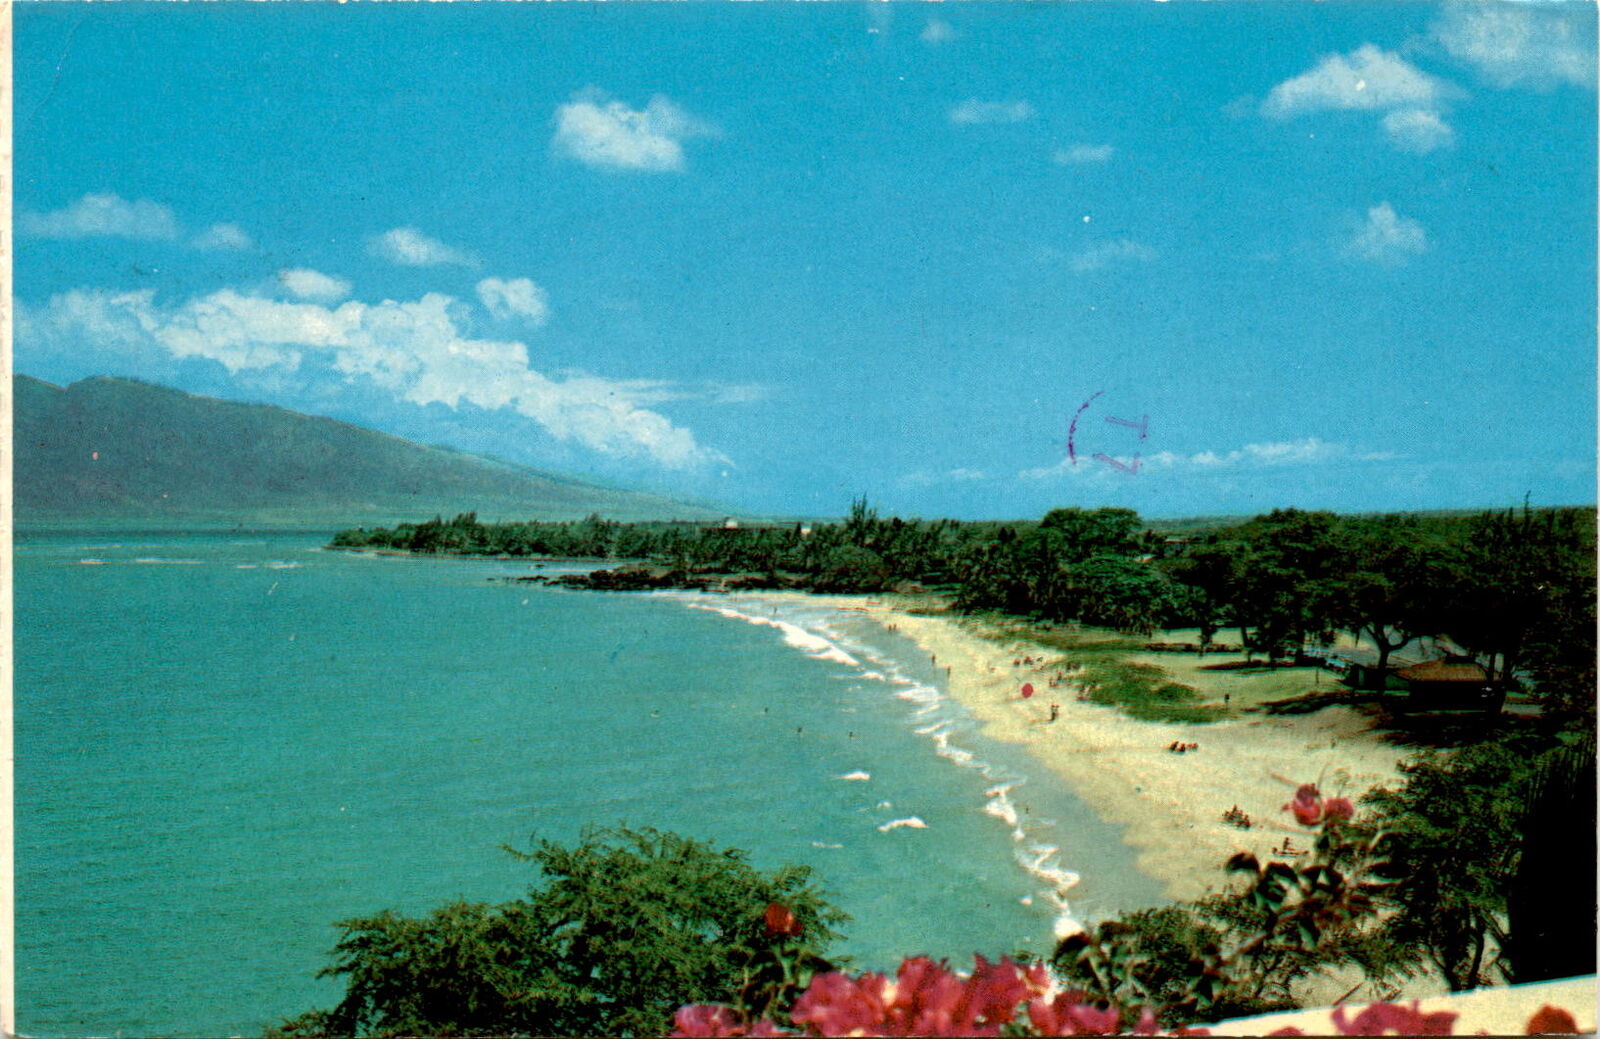 Kamaole Beach Park Kihei Maui Hawaii gently sloping beaches golden Postcard